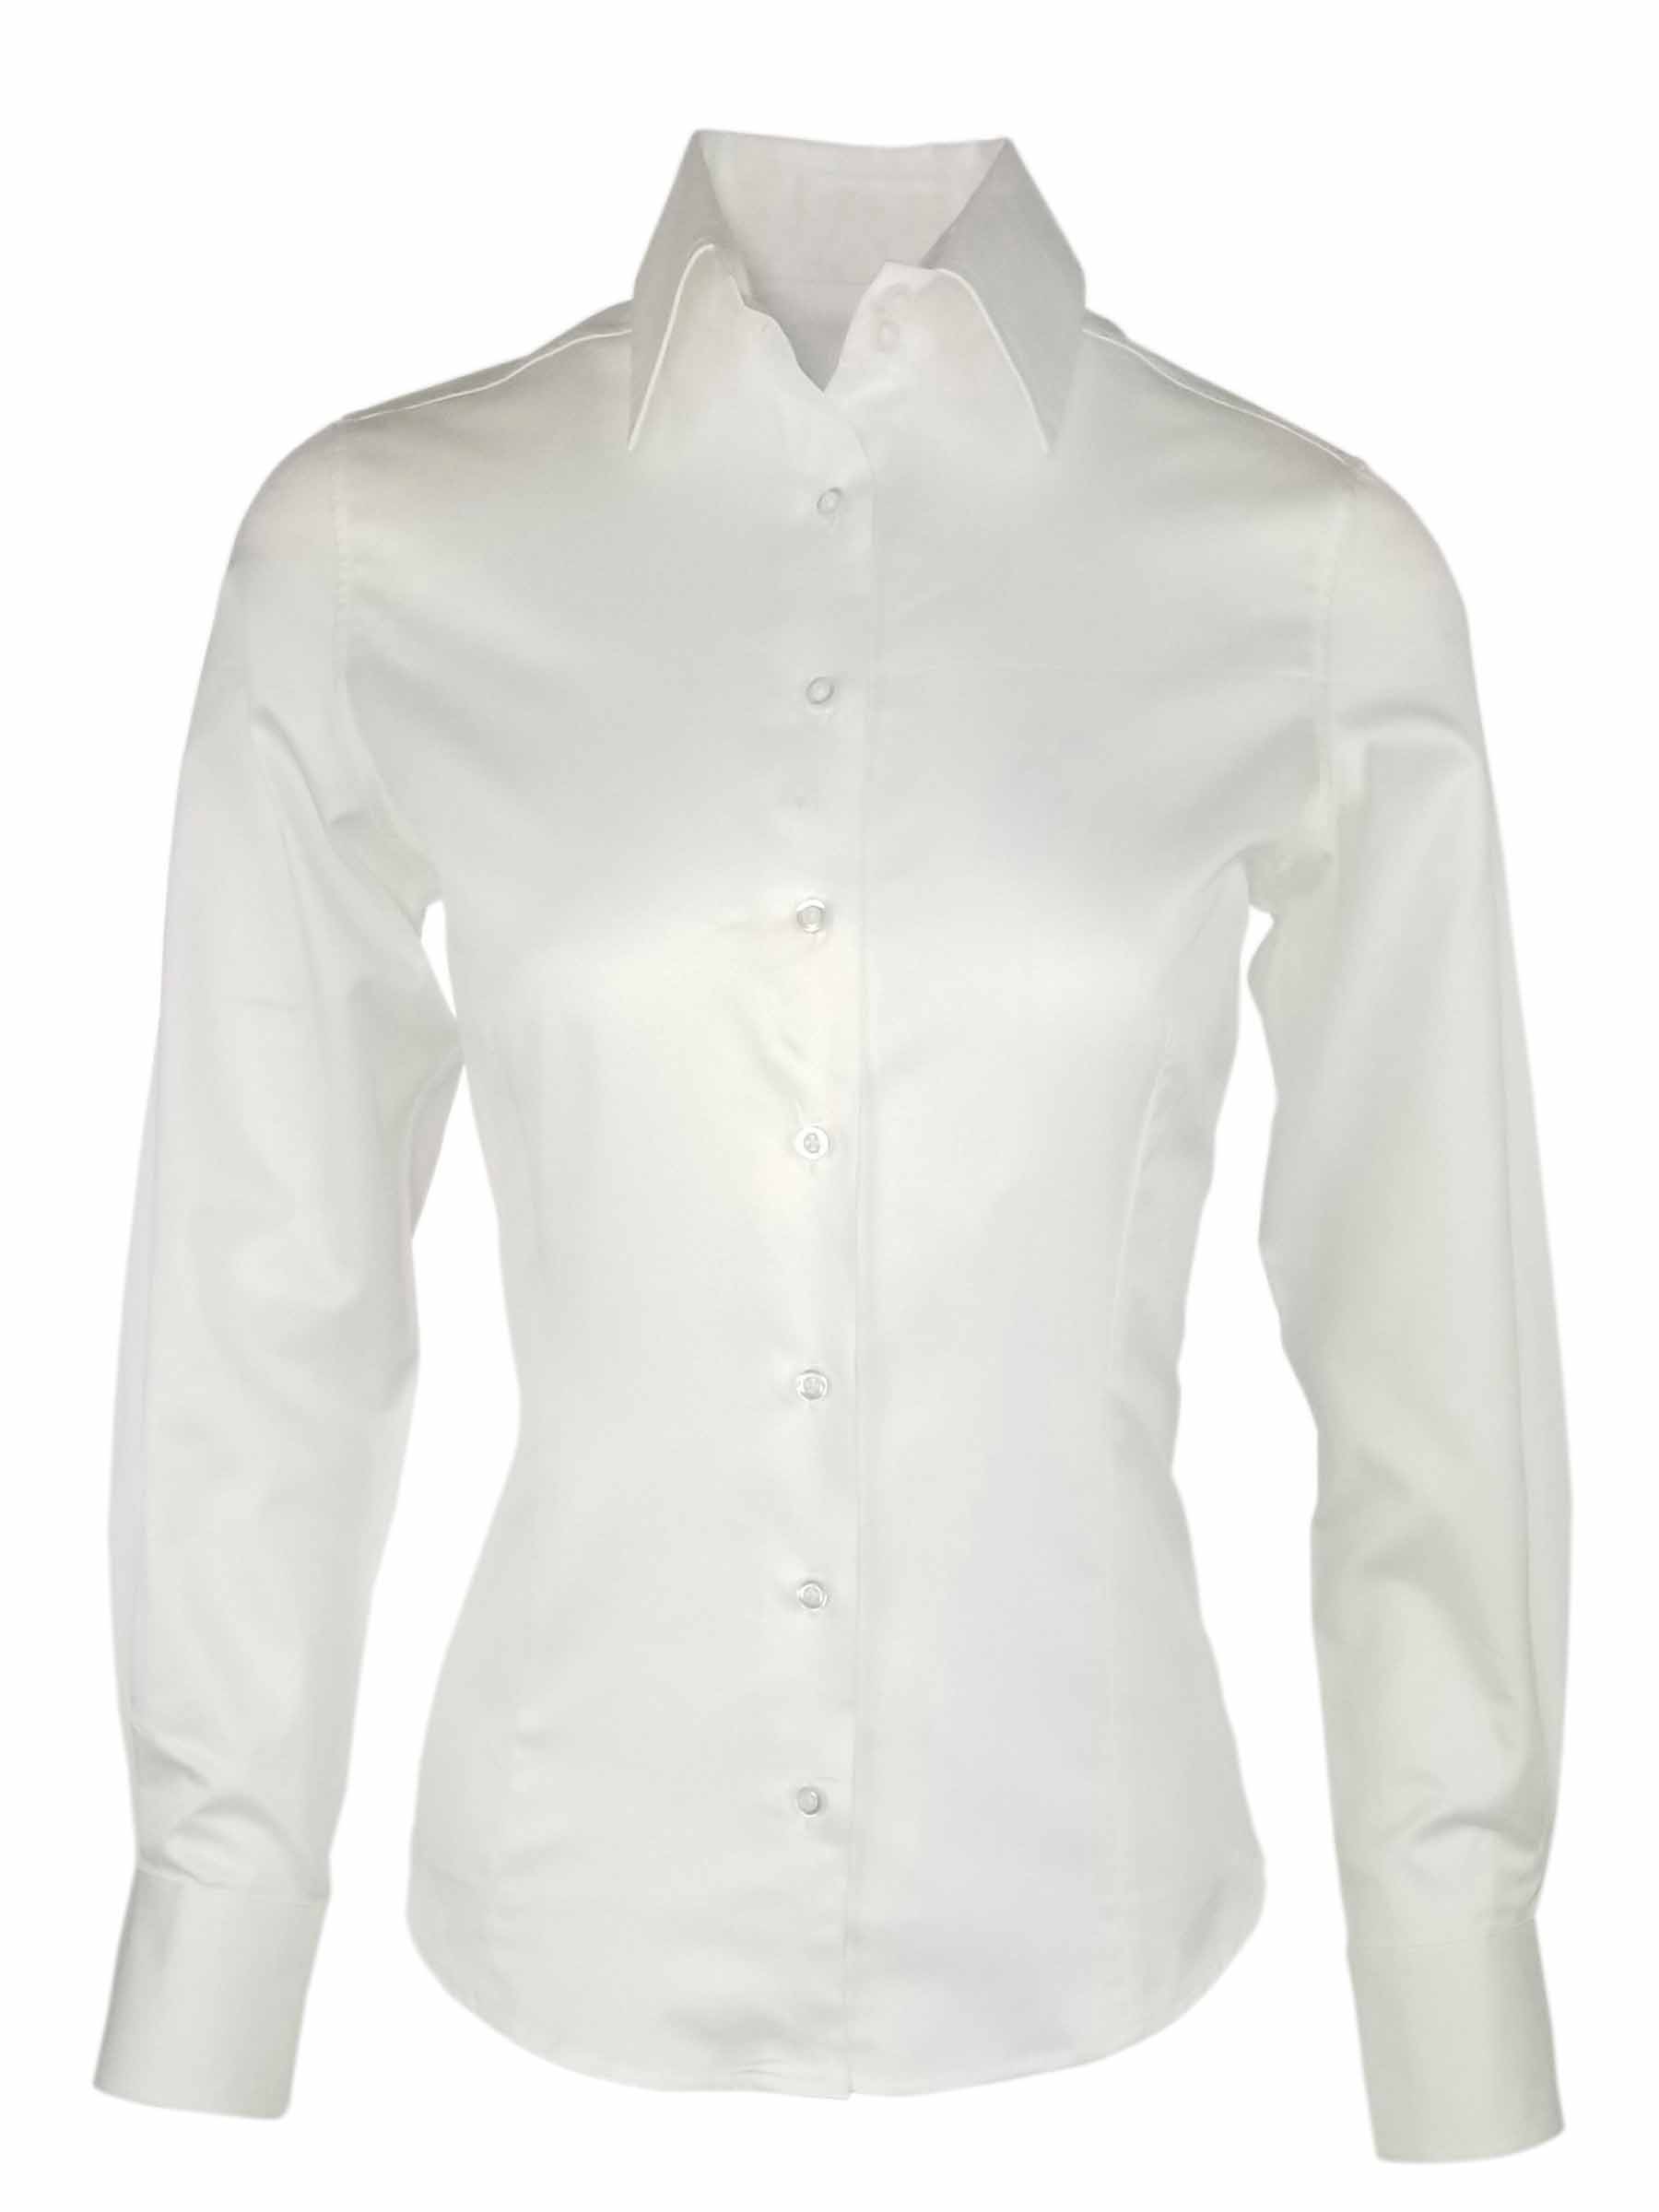 Women's Everyday Basic Shirt - White Long Sleeve | Uniform Edit